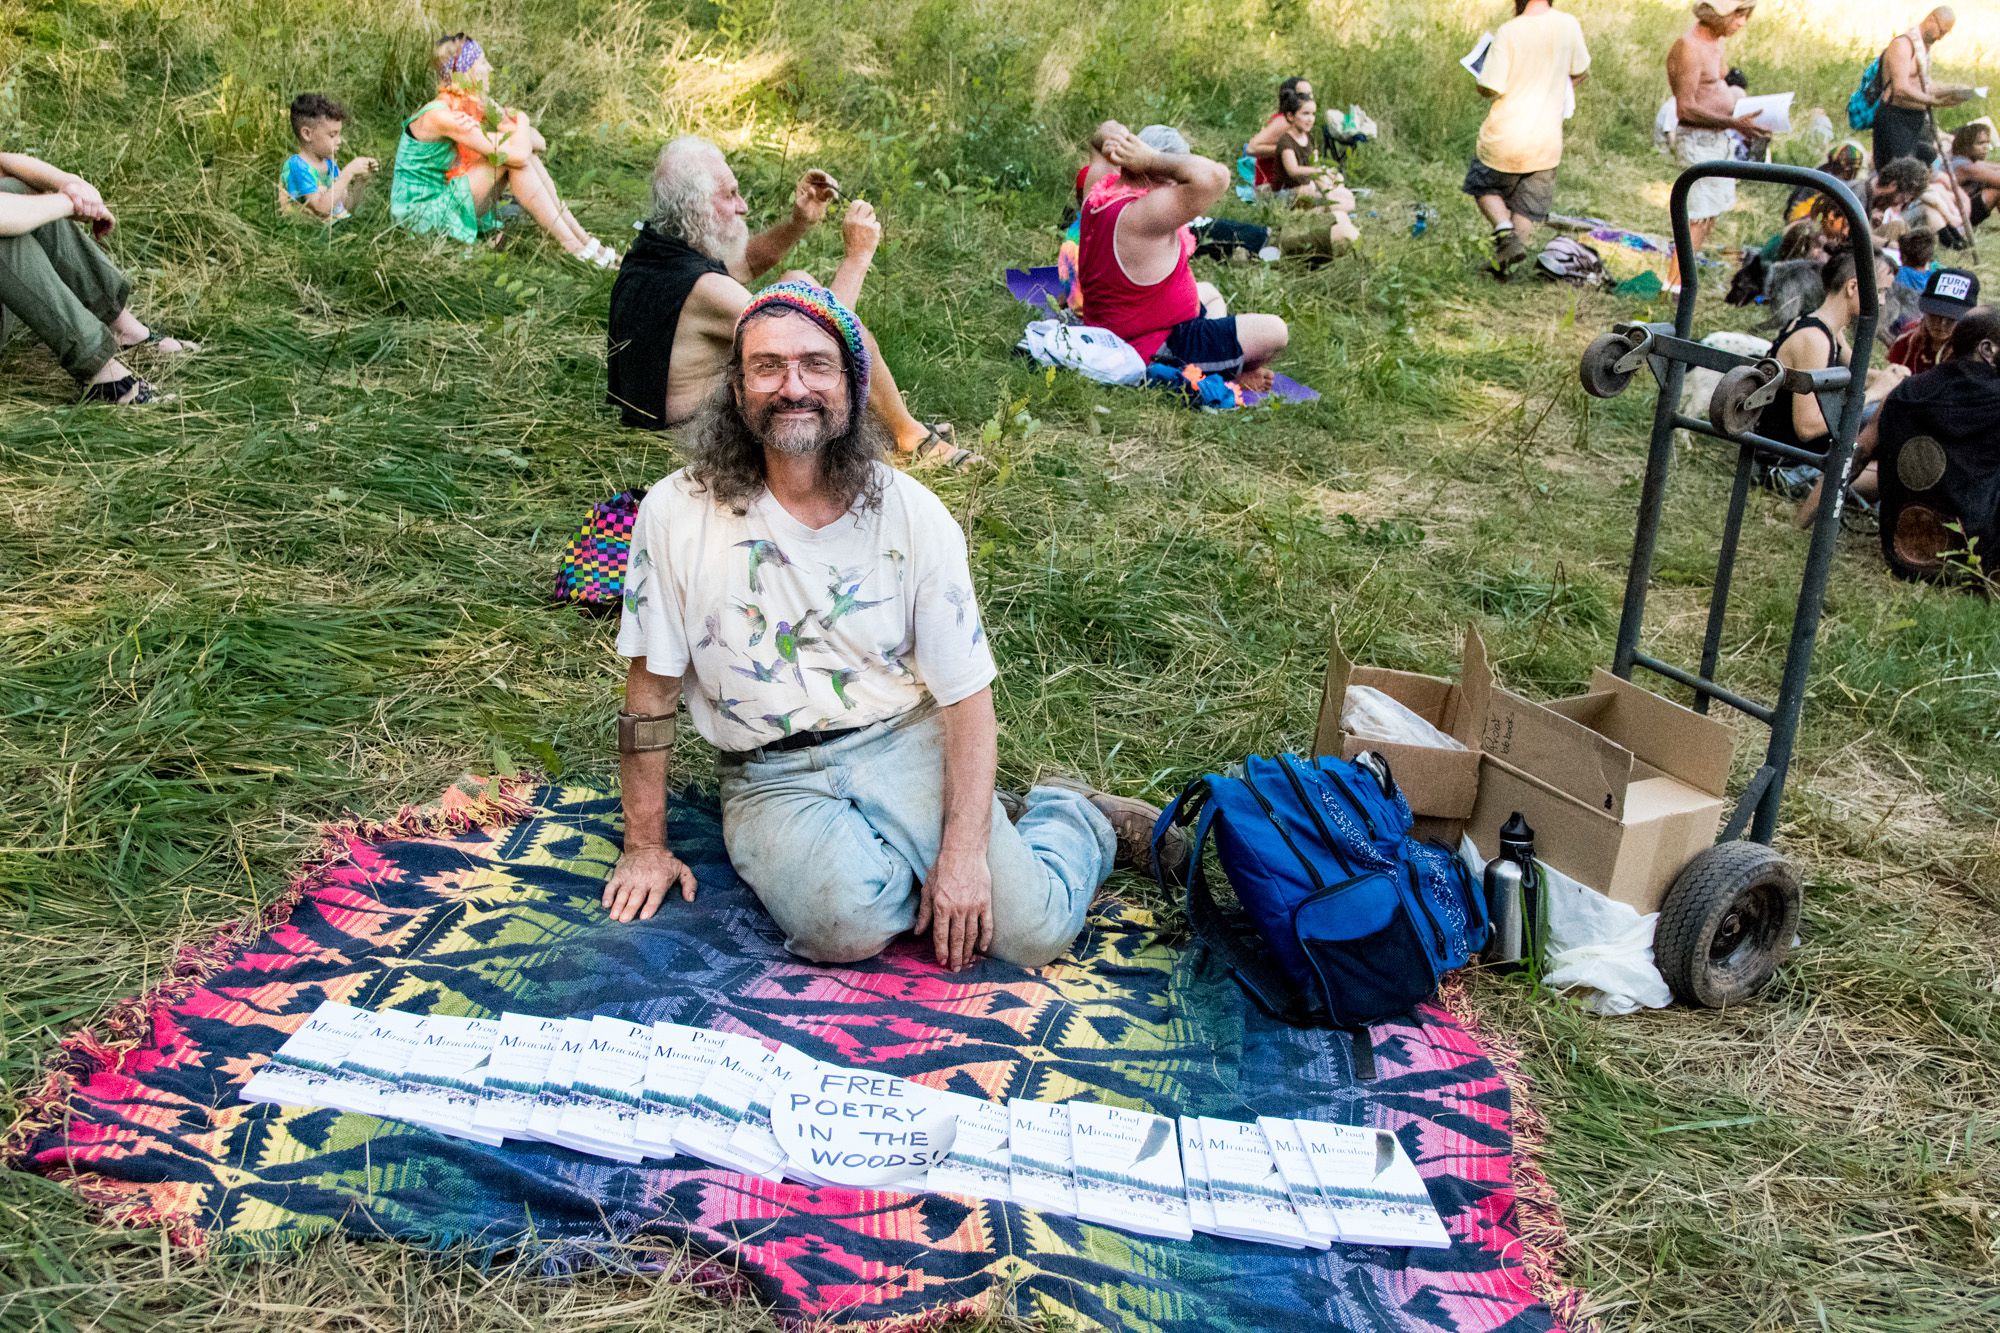 Rainbow Hippy Tribe Sex - Rainbow Family of Living Light gathering comes to Georgia